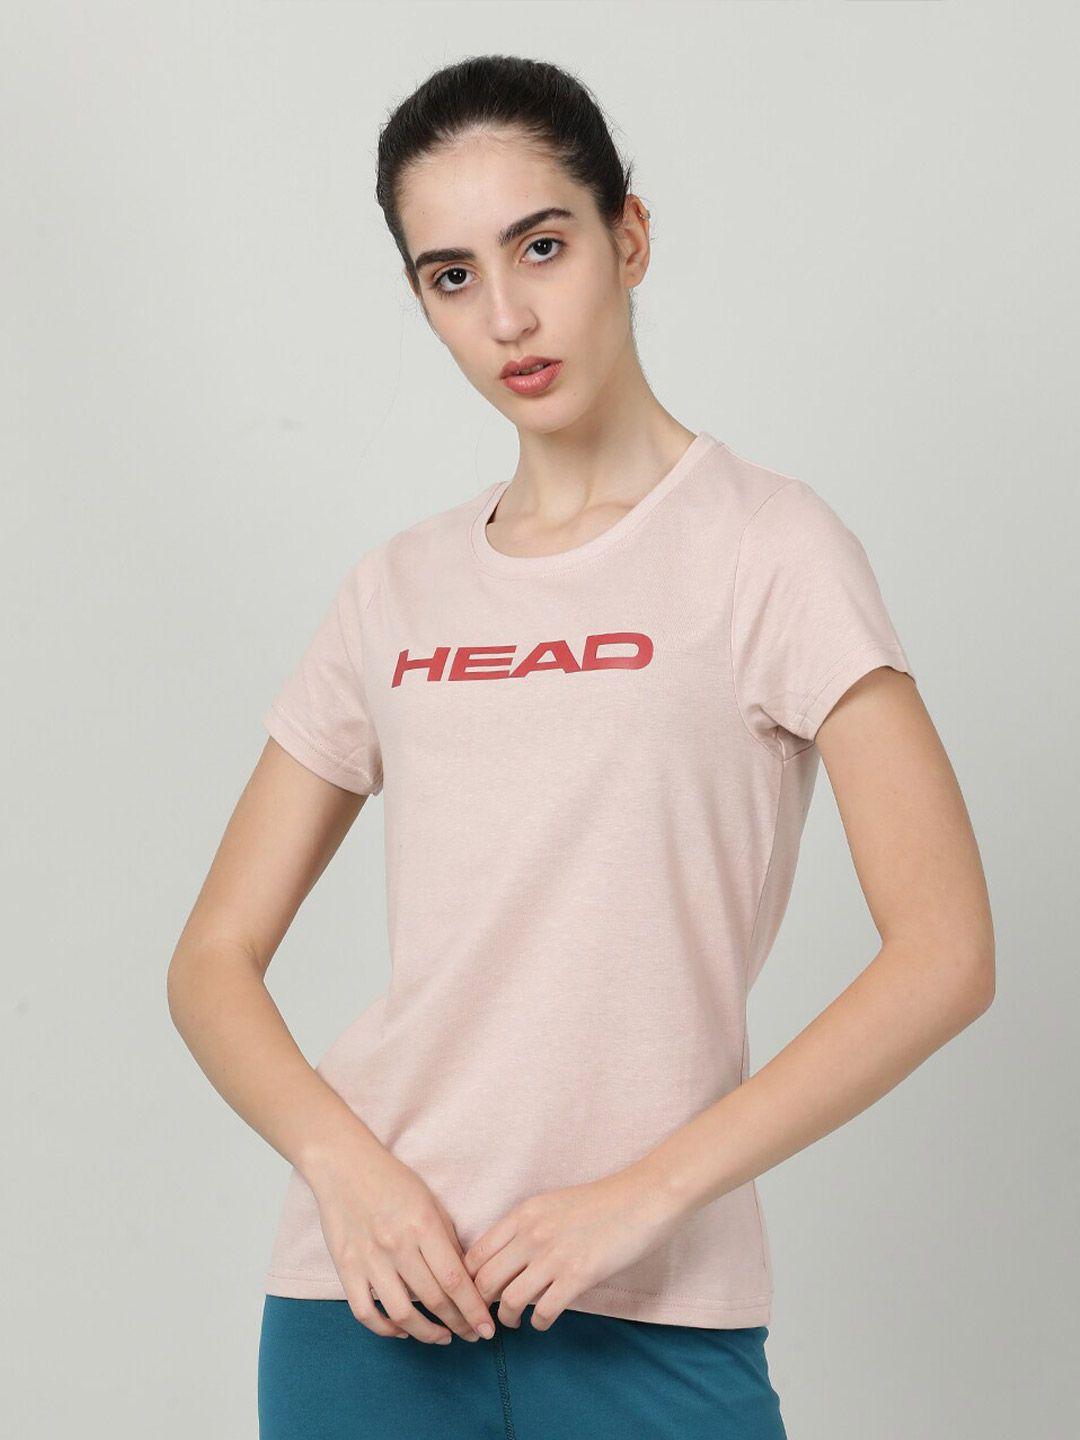 head women cotton typography printed t-shirt